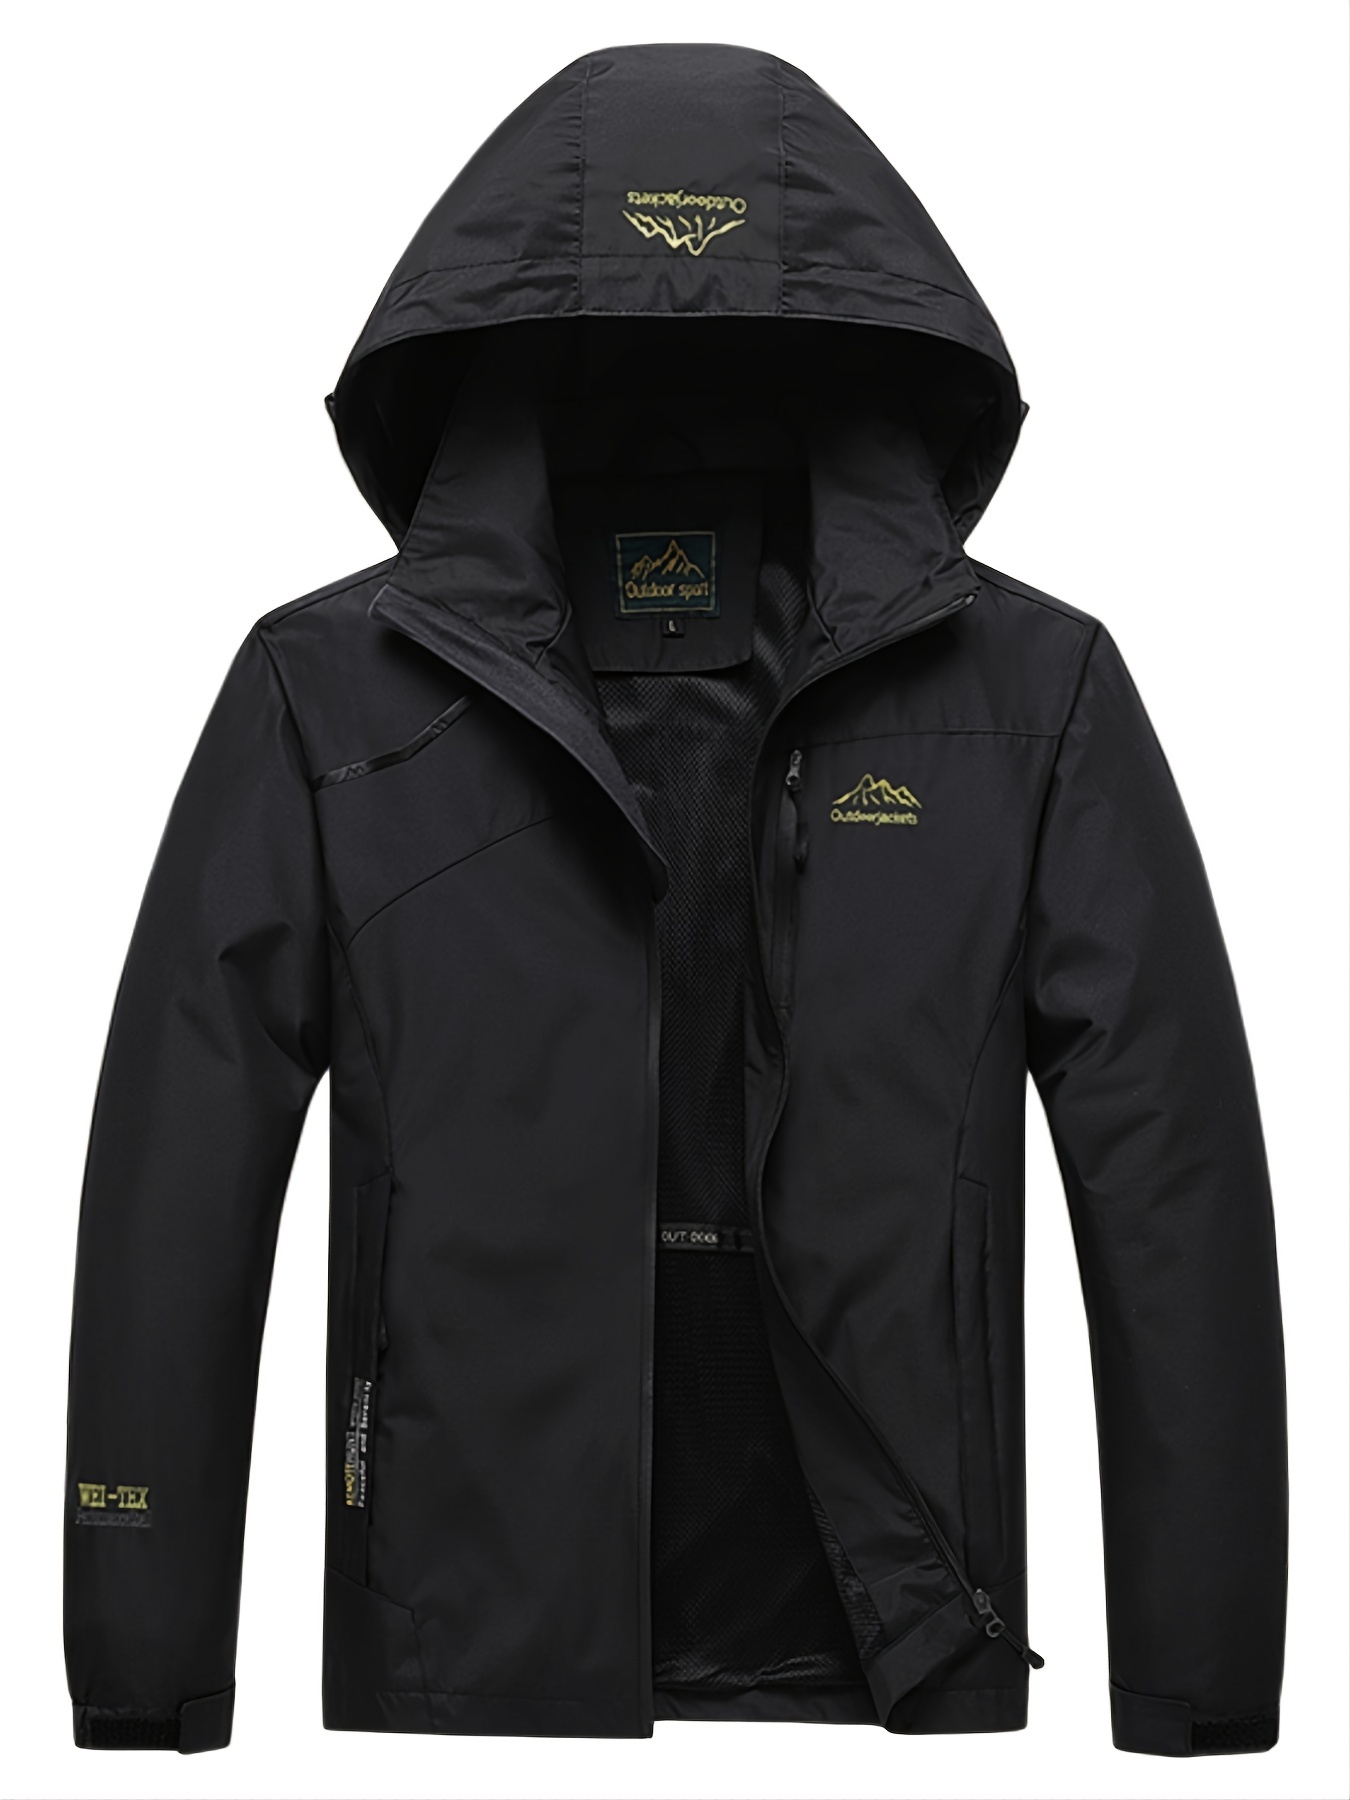 mens waterproof rain jacket lightweight raincoat windbreaker with hood for hiking travel outdoor details 5